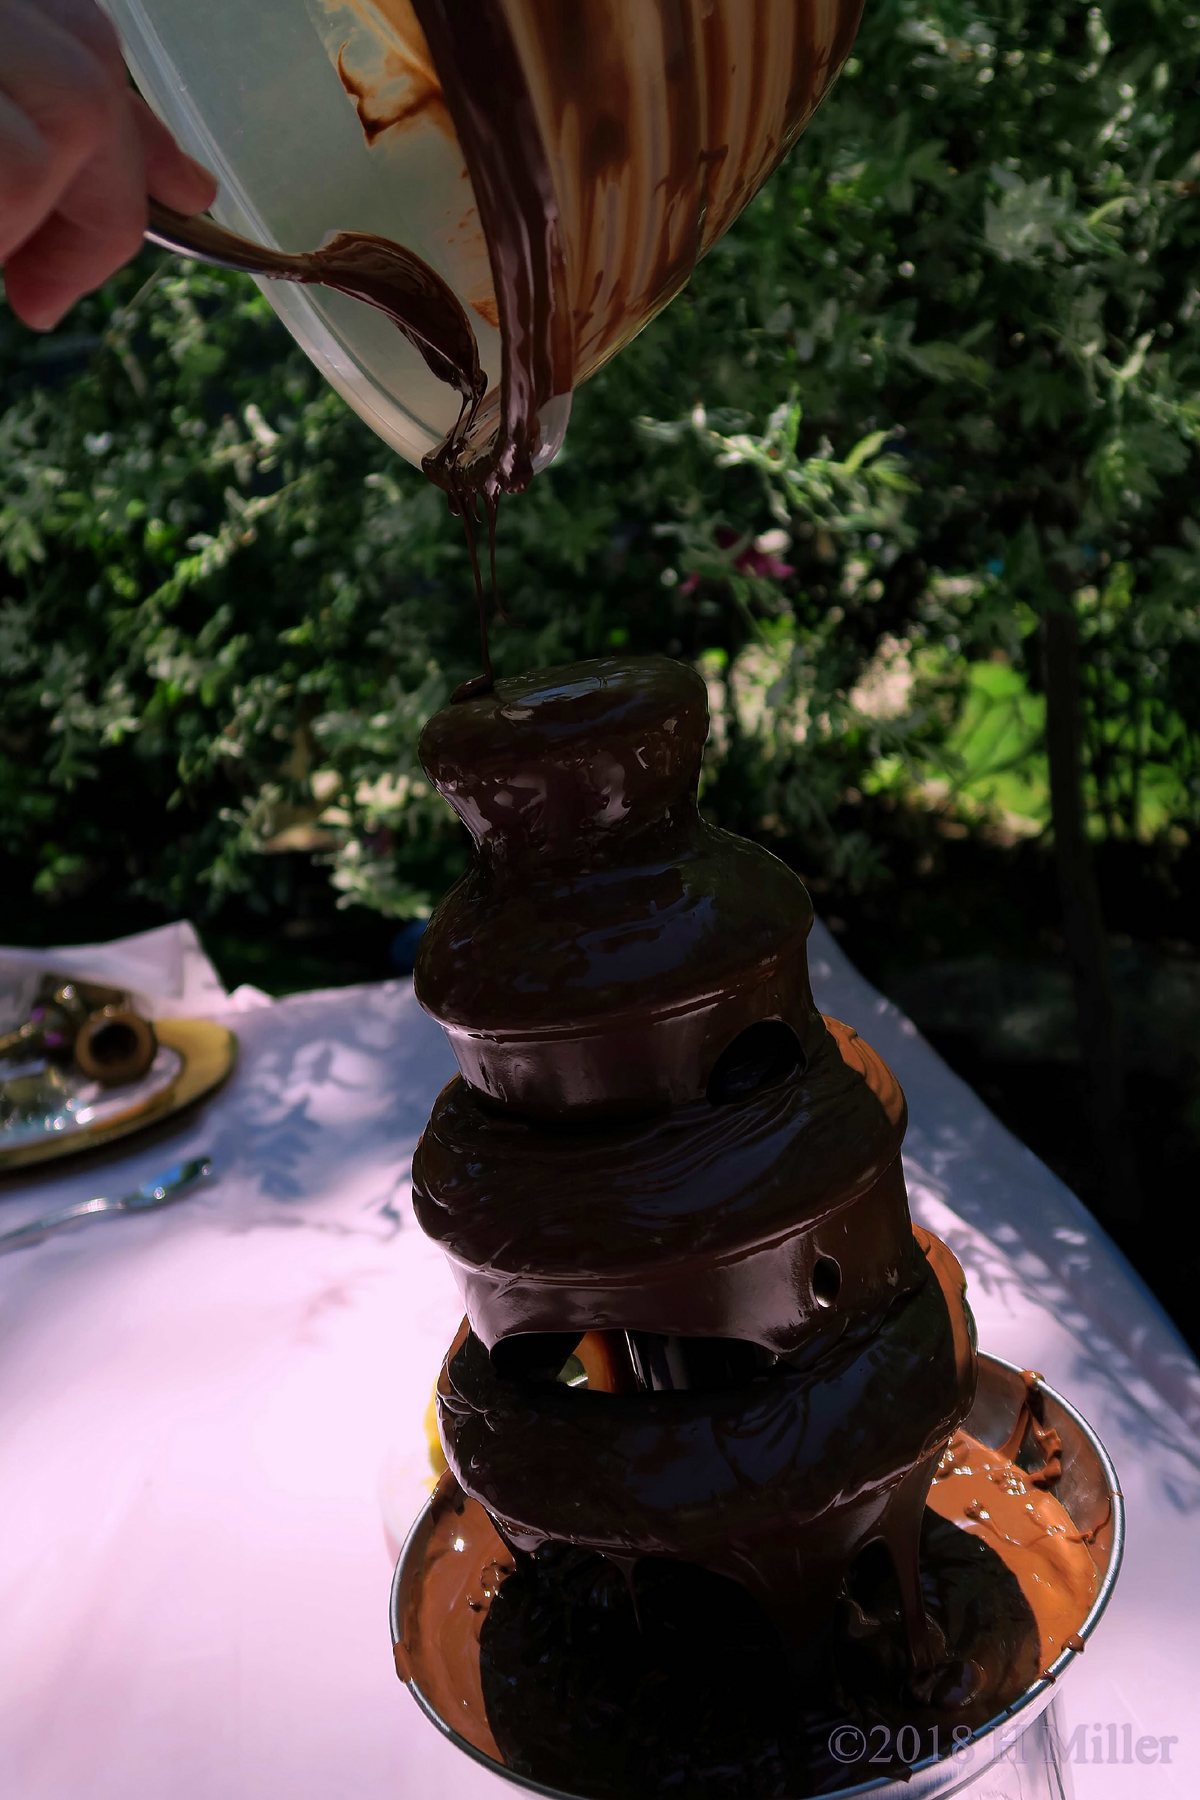 Scooping Chocolate Onto The Chocolate Fountain 